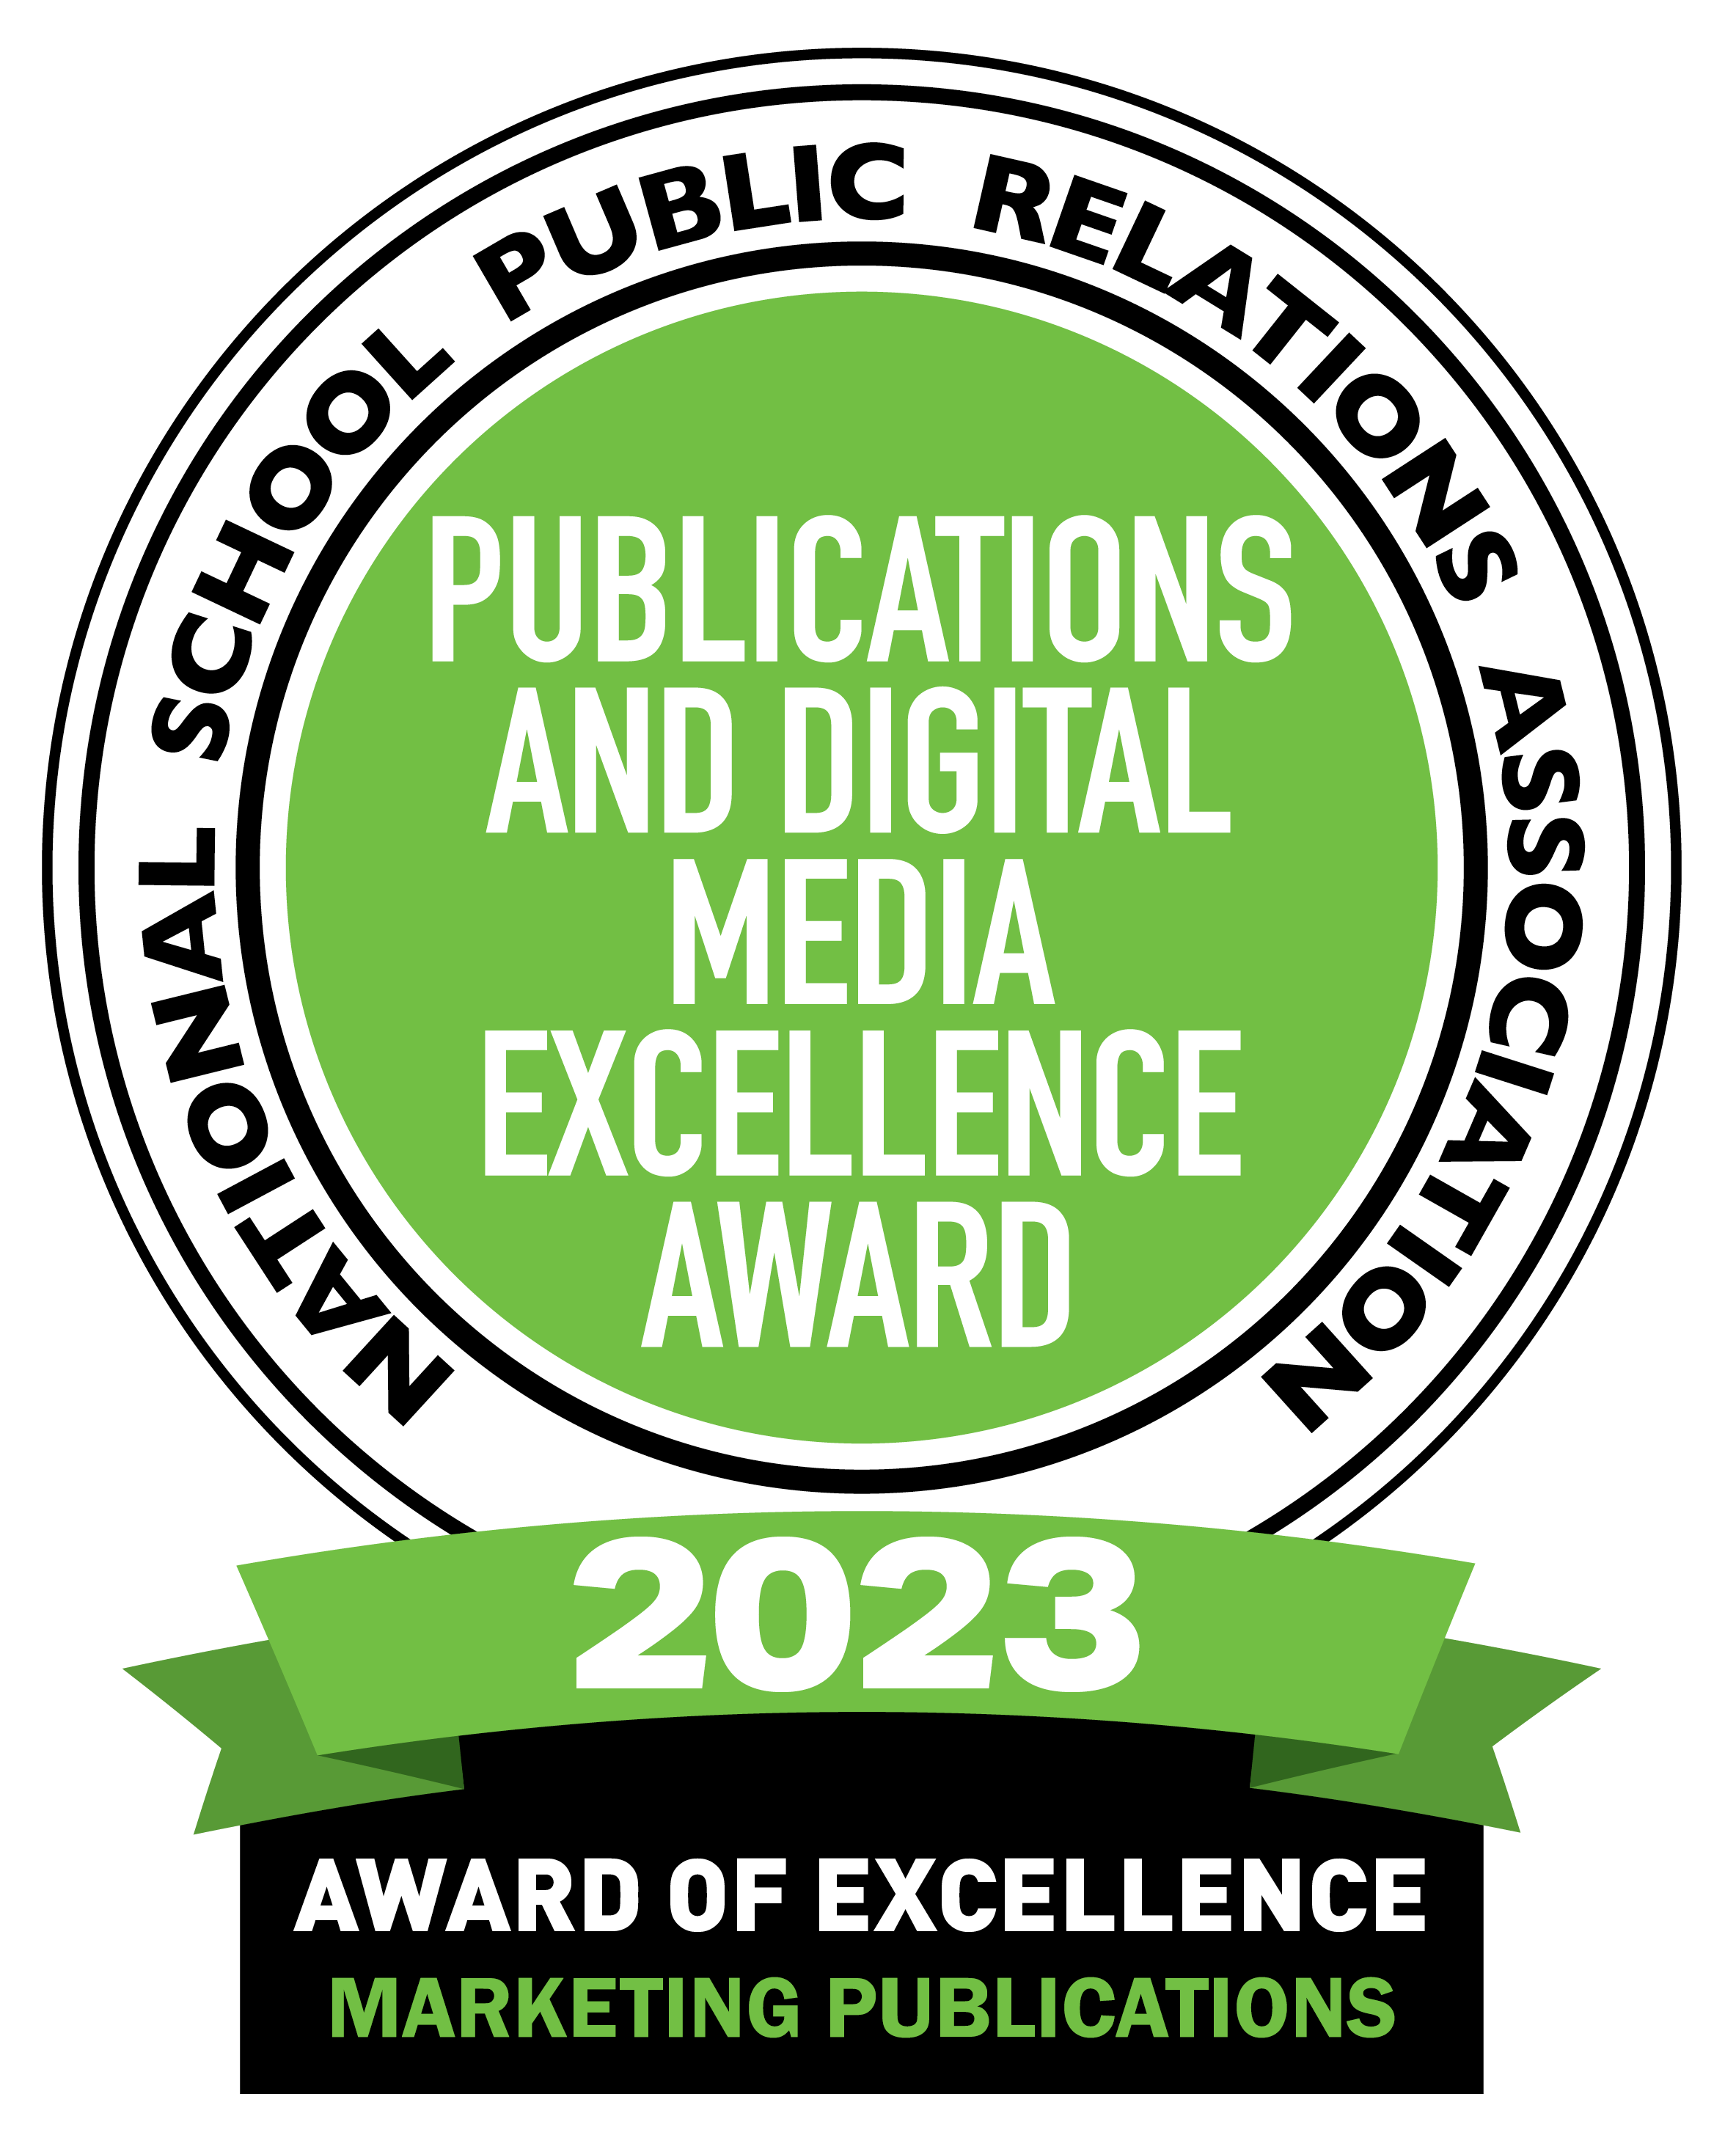 nspra publications and digital media award of excellence marketing publciations